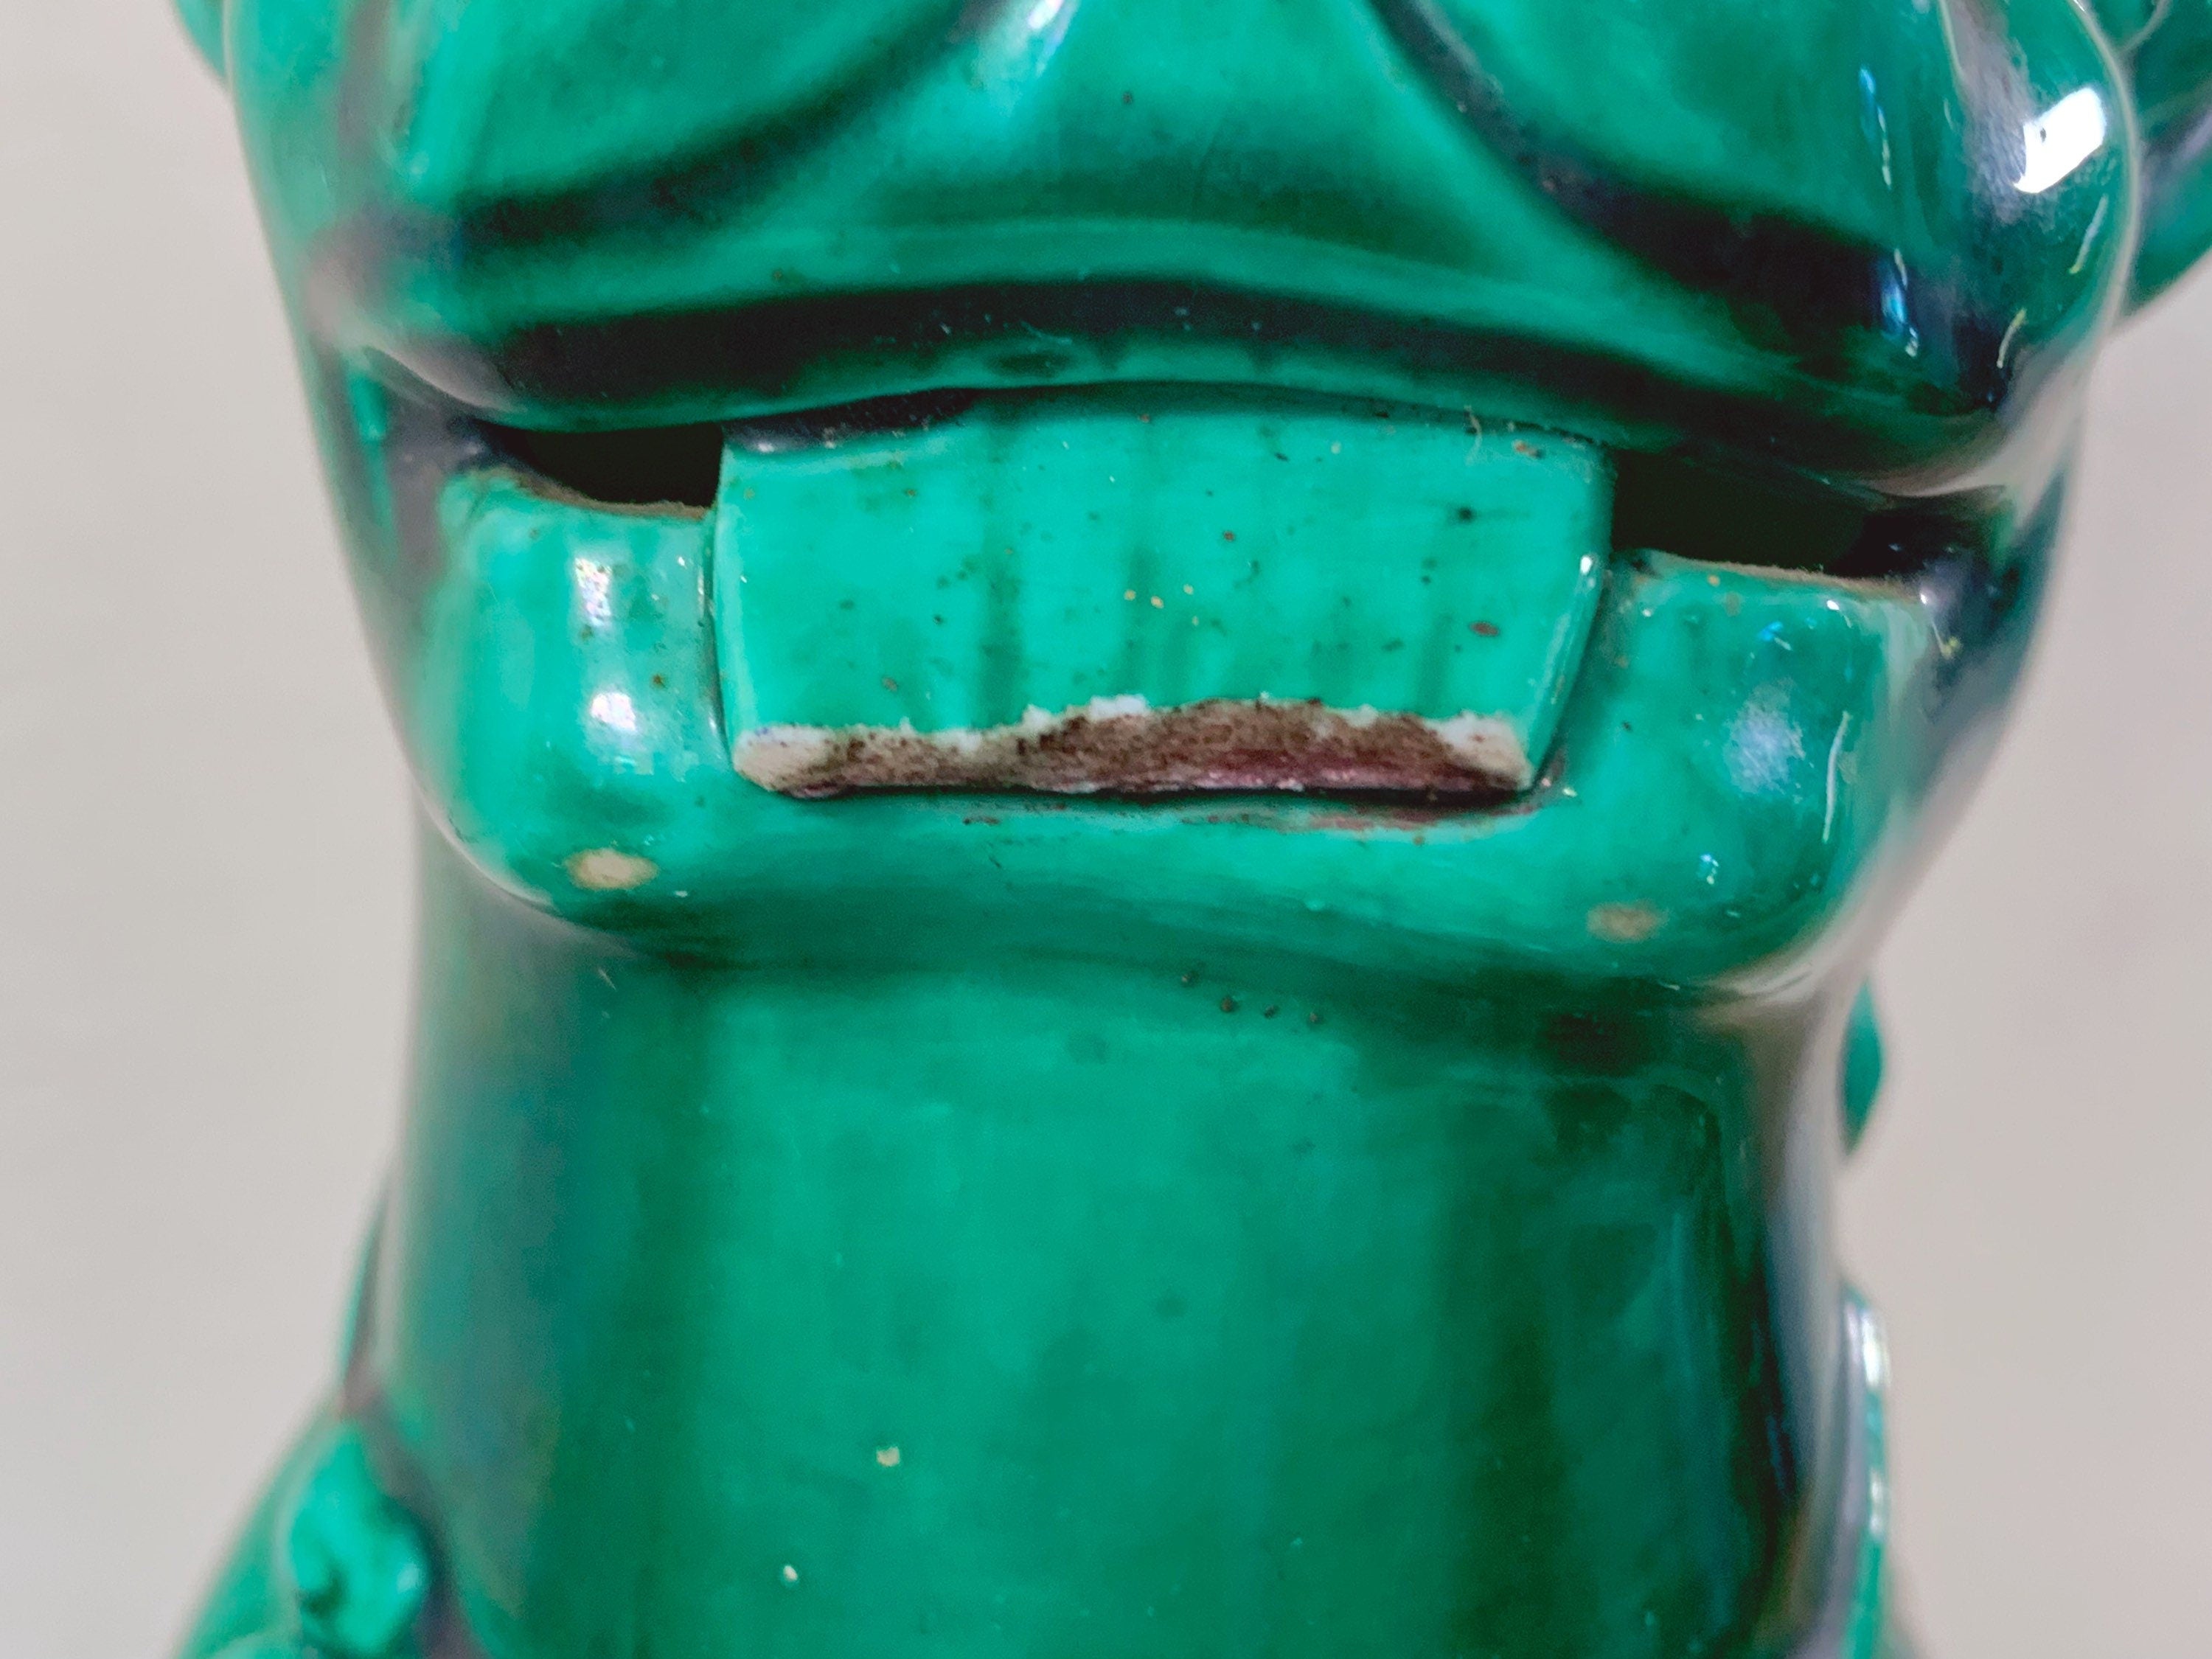 Vintage Emerald Green Glazed Ceramic Foo Dog Statue by Bidasoa Made in Spain | Asian Inspired Home Decor